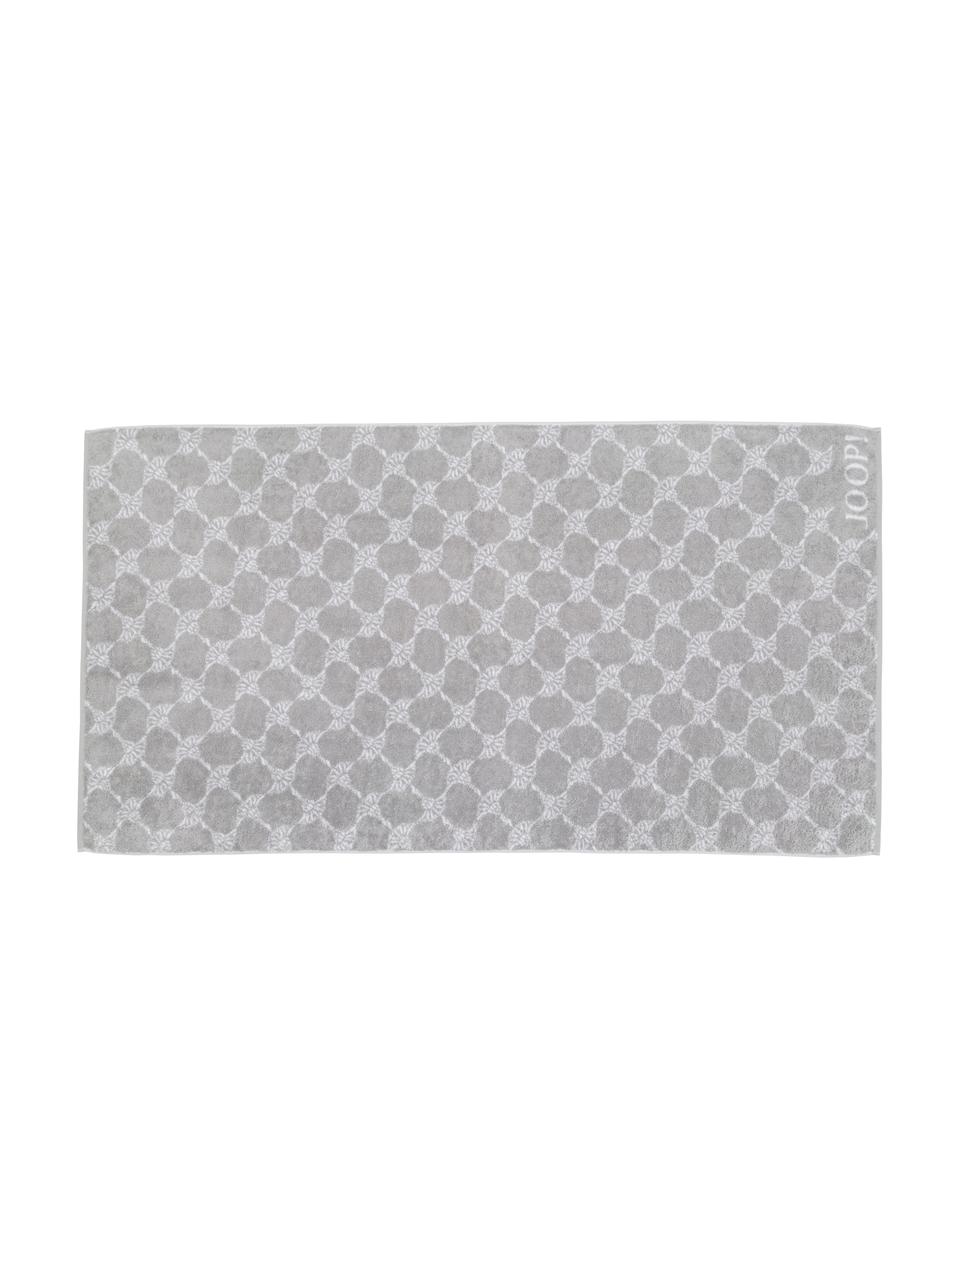 Asciugamano con stampa floreale in varie misure Classic Cornflower, Grigio argento, bianco, Telo bagno, Larg. 80 x Lung. 150 cm